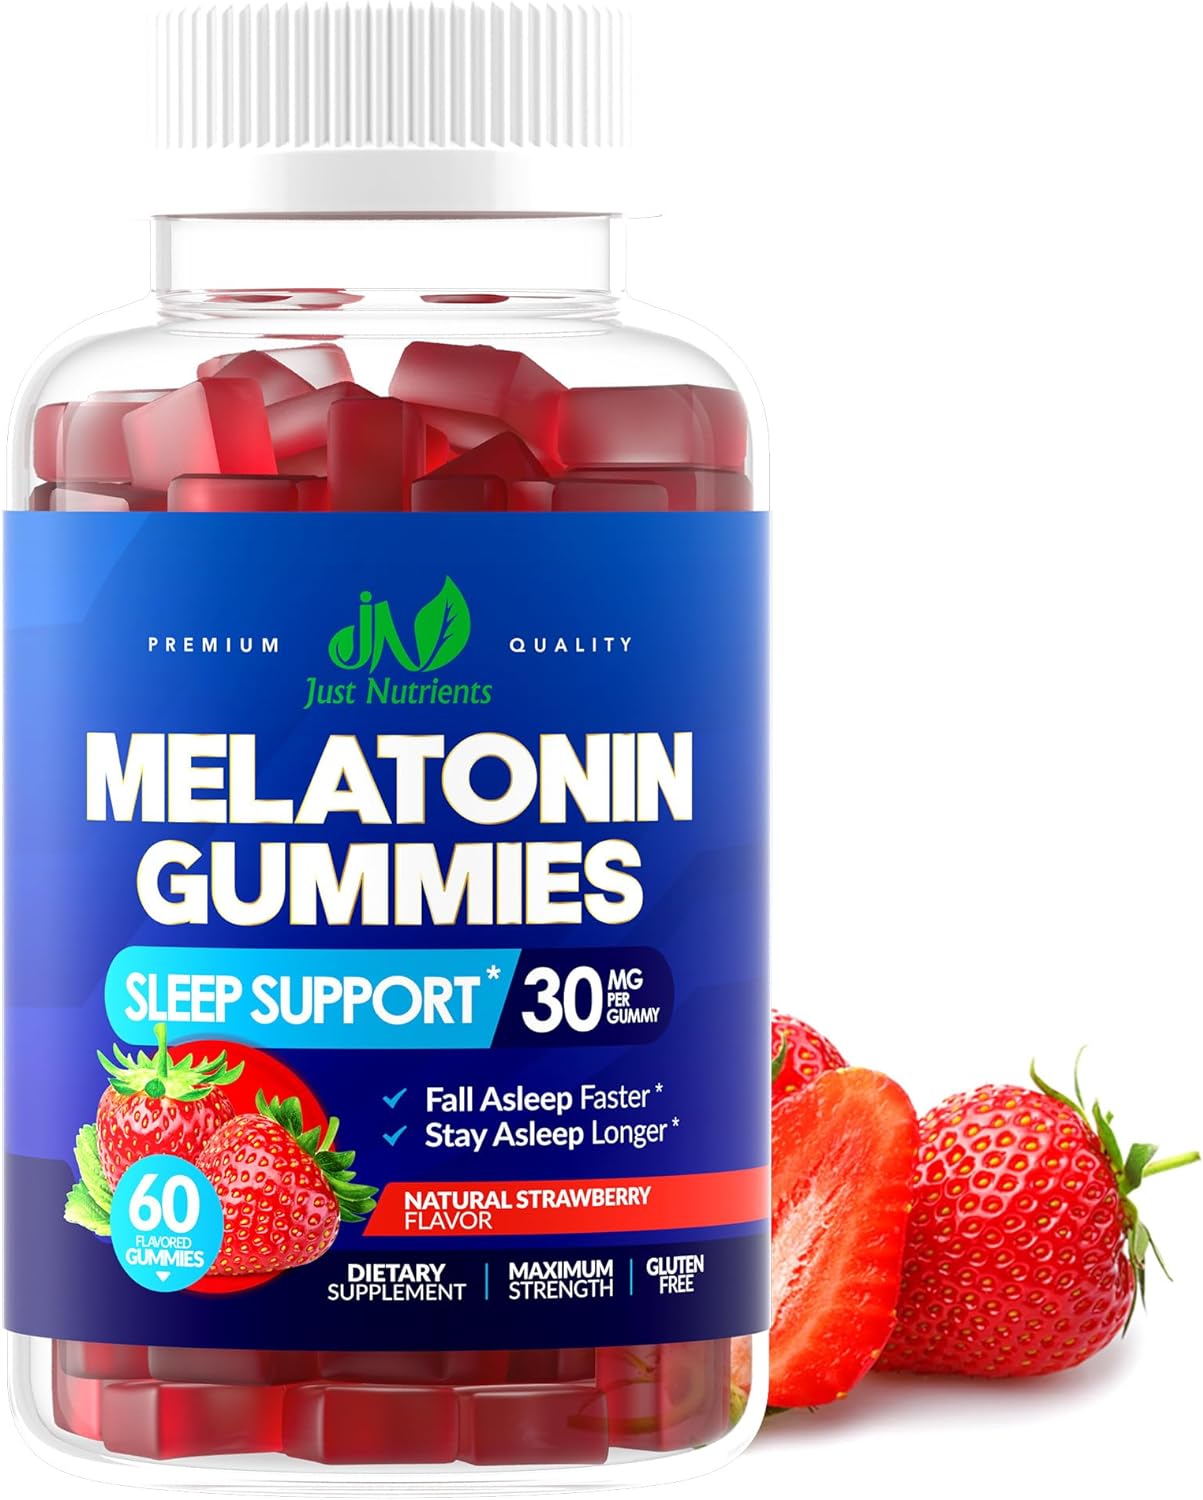 Melatonin 30mg Gummies for Adults (60 Servings) - Maximum Strength Sleep Gummies with 30mg of Melatonin Per Gummy - Gluten-Free, Sugar-Free, Non-GMO, 100% Vegetarian, Strawberry Flavor - 60 Gummies